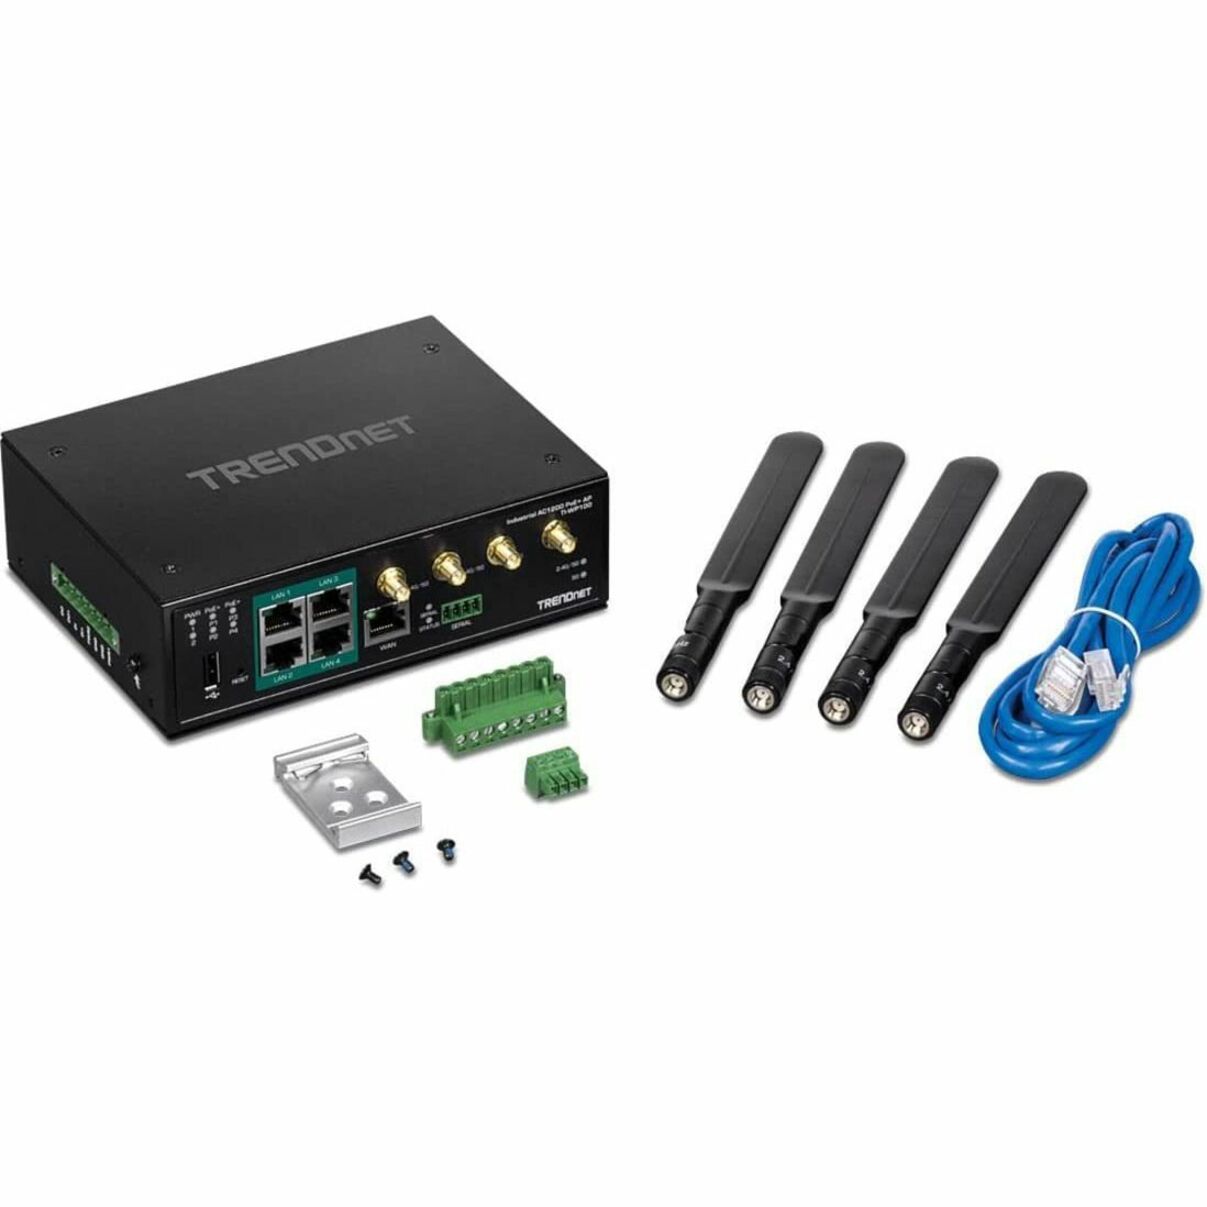 TRENDnet TI-WP100 Industrial AC1200 Wireless Gigabit PoE+ Router, TAA Compliant